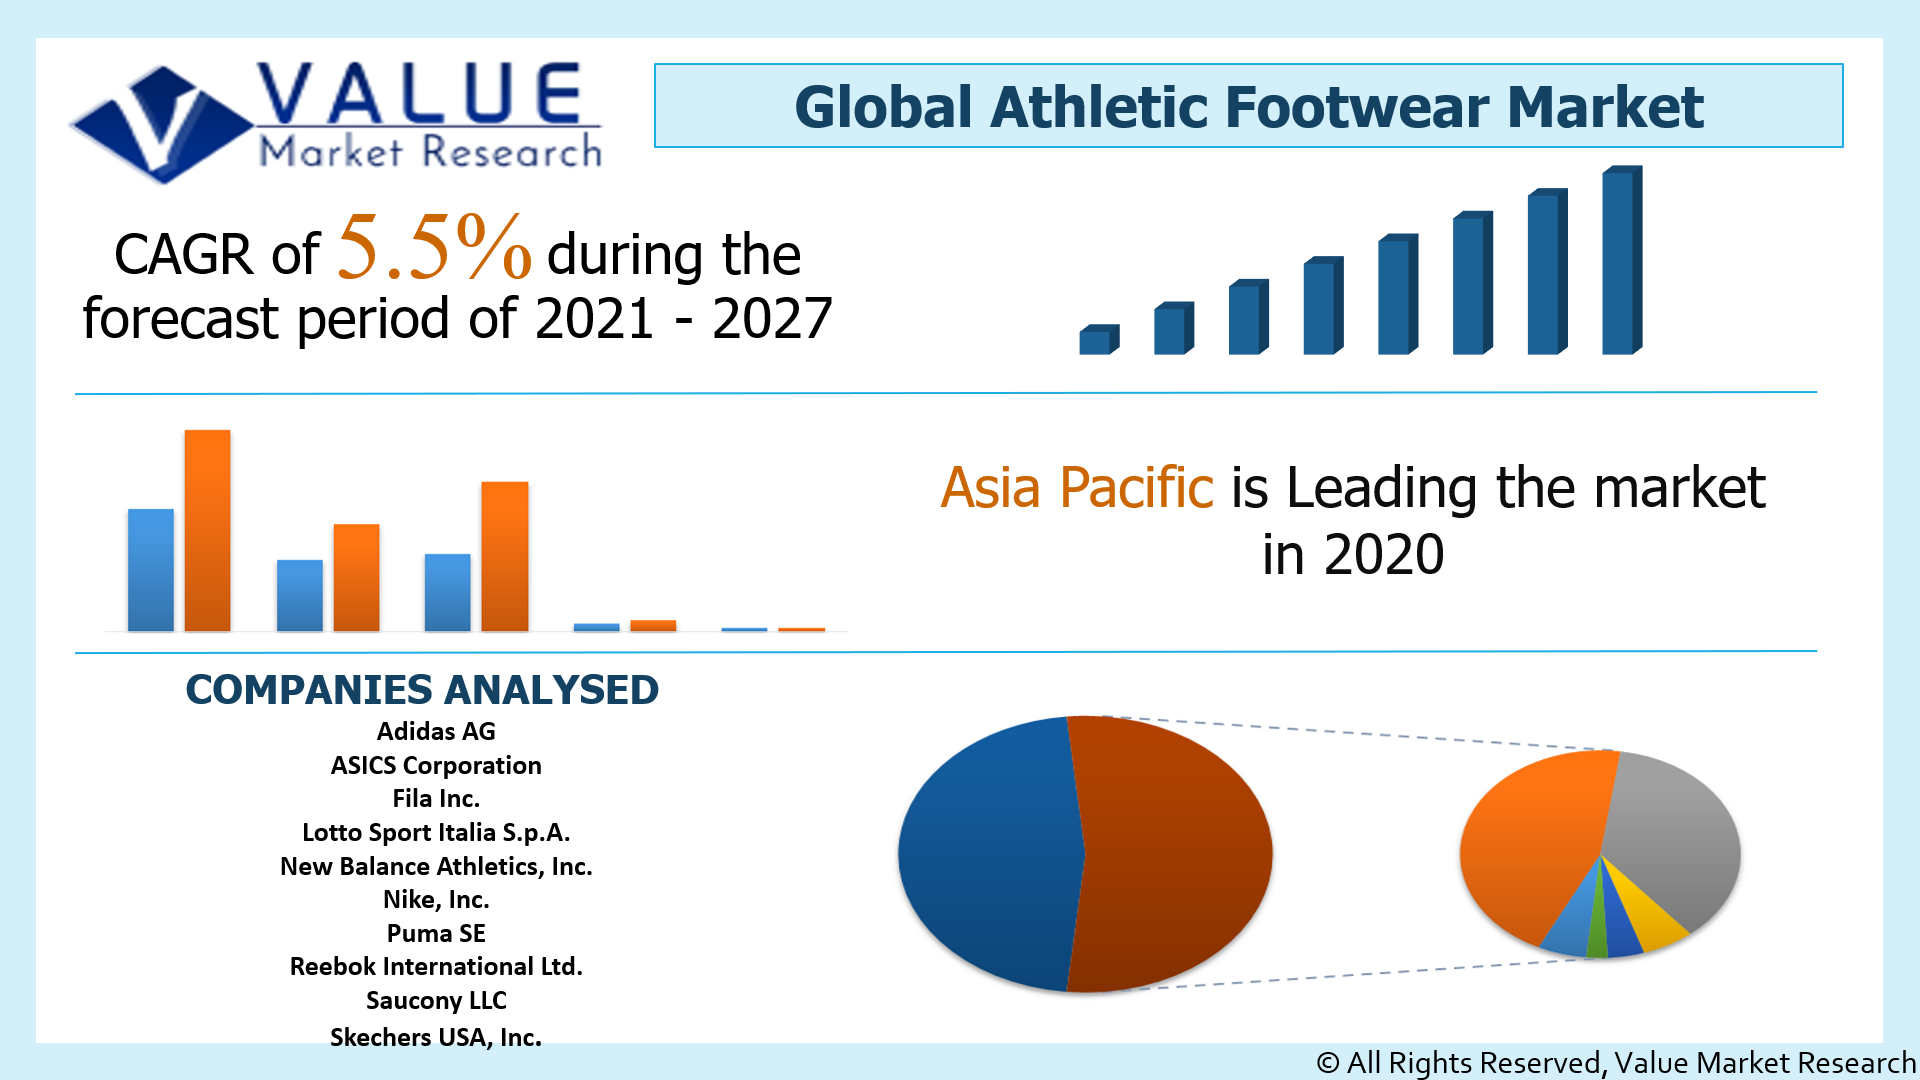 Global Athletic Footwear Market Share